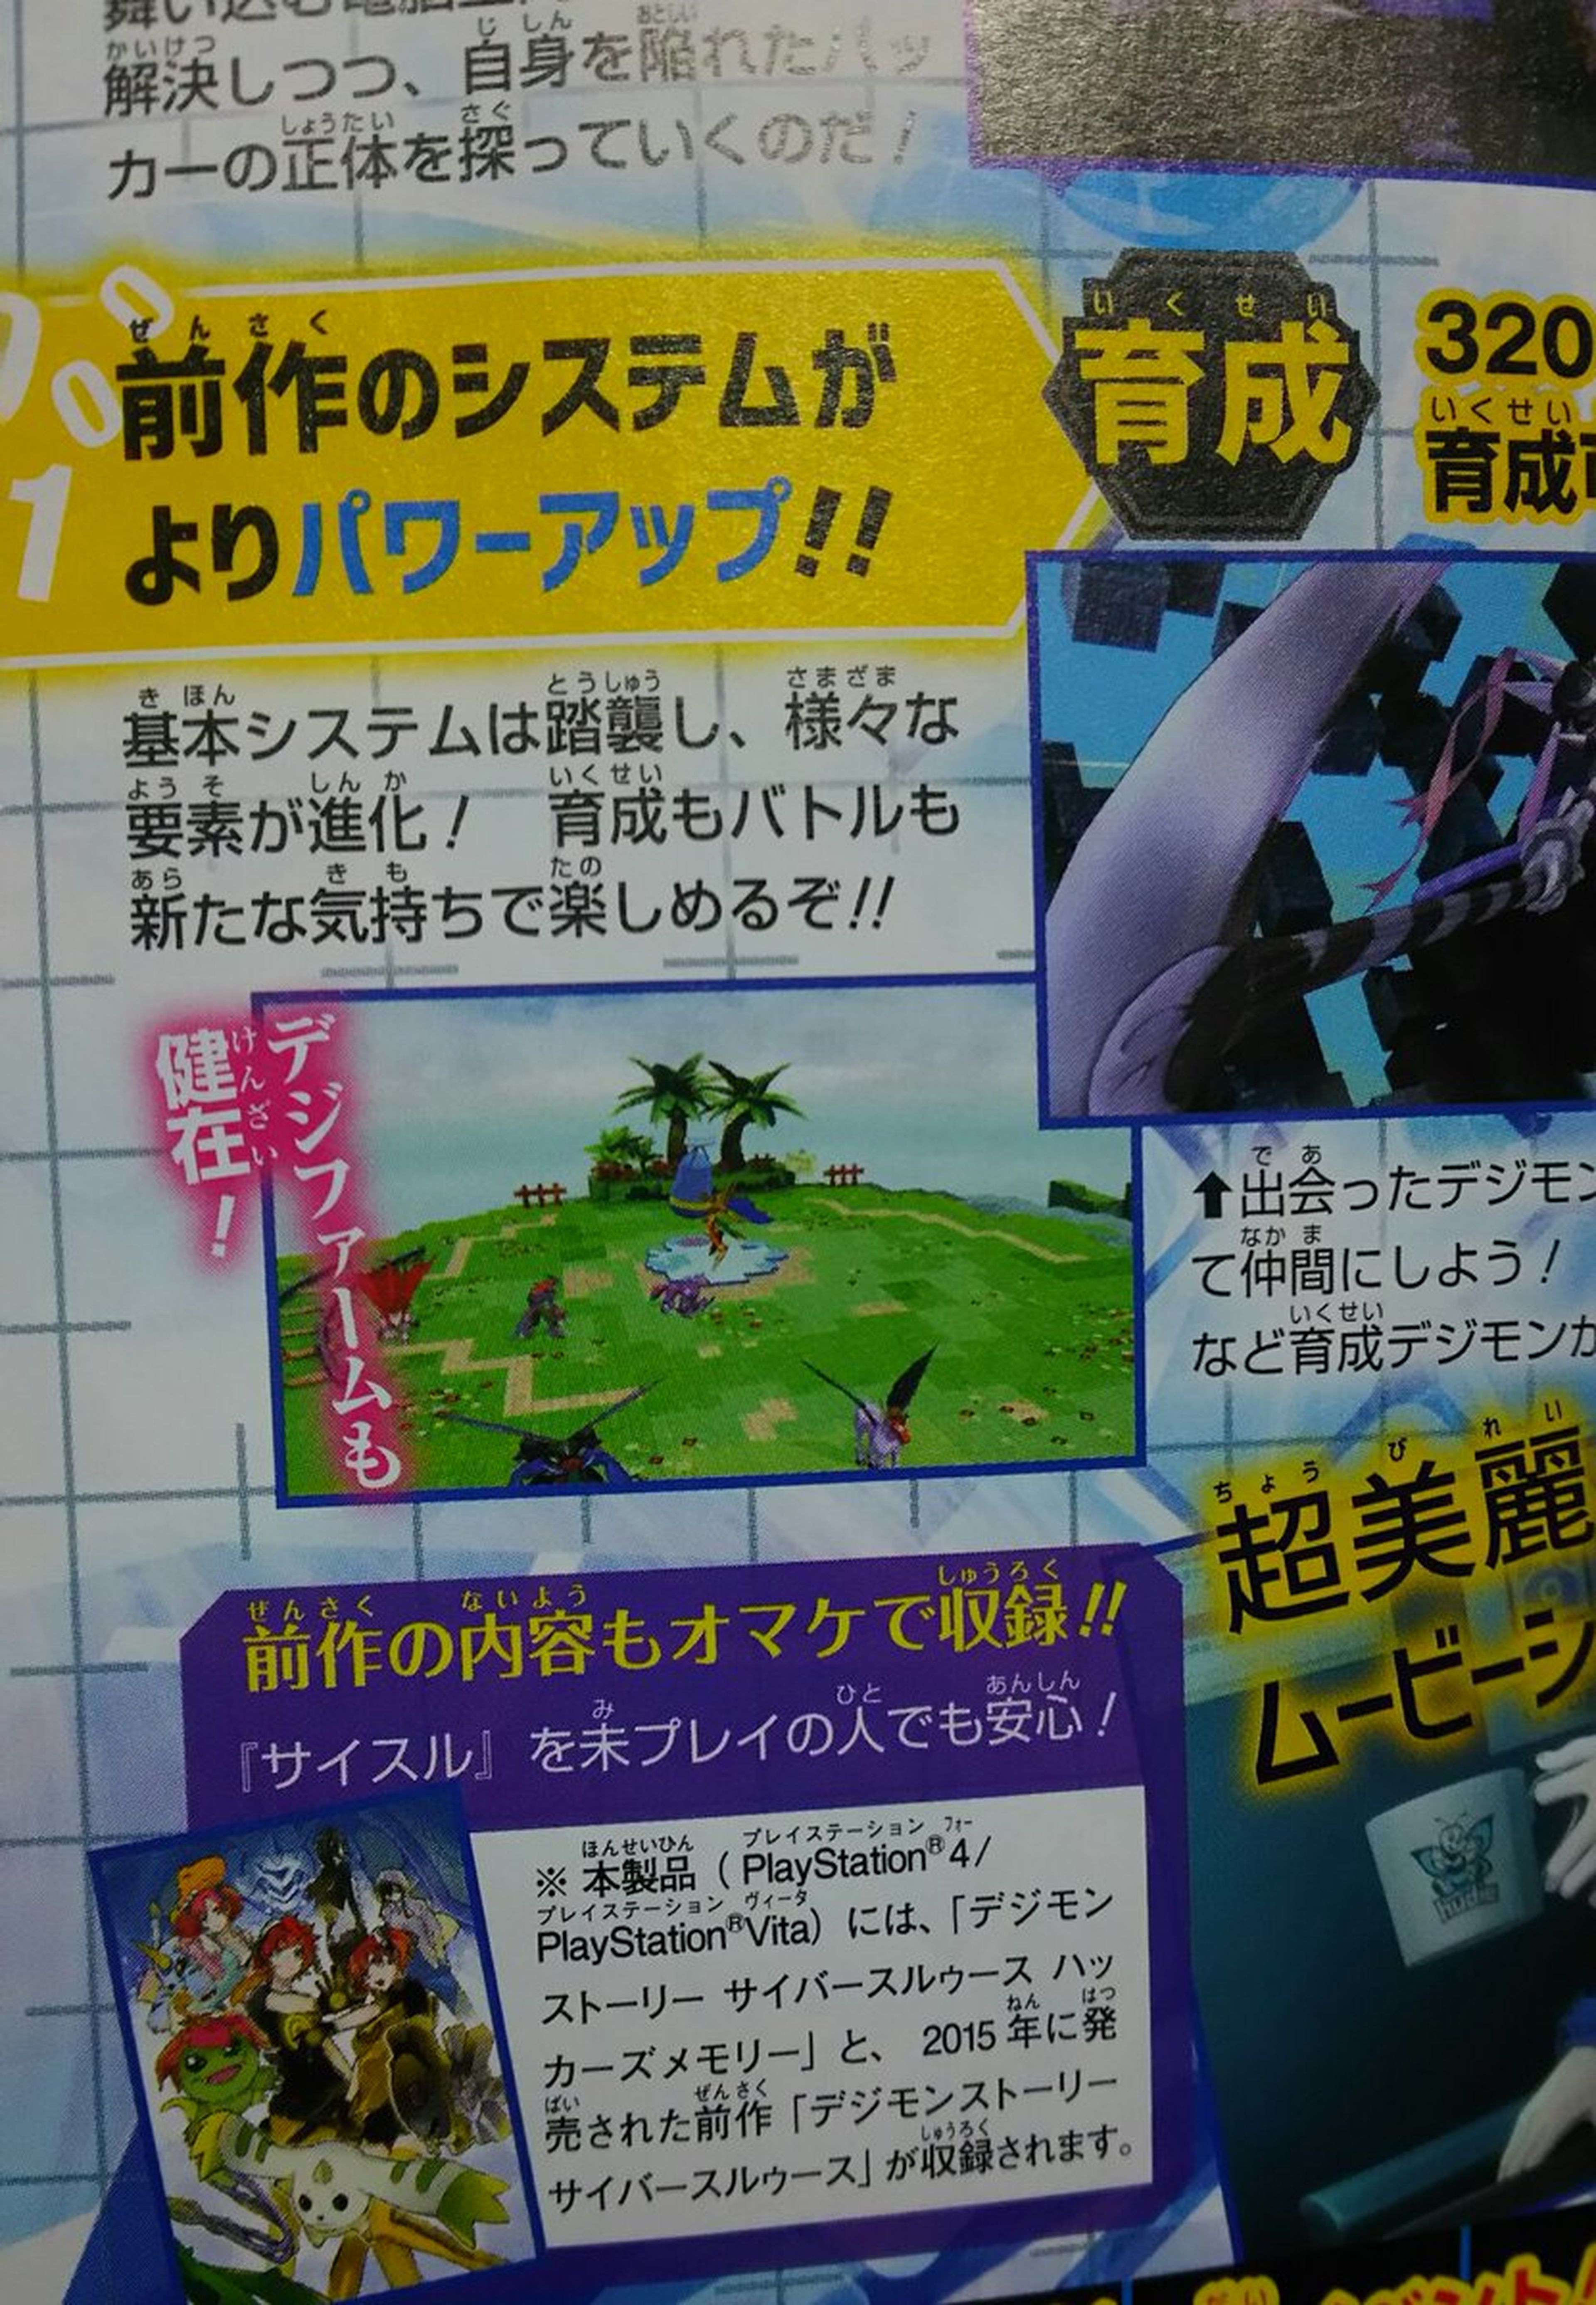 Digimon Story Cyber Sleuth Haker's Memory anunciado para PS4 y PS Vita